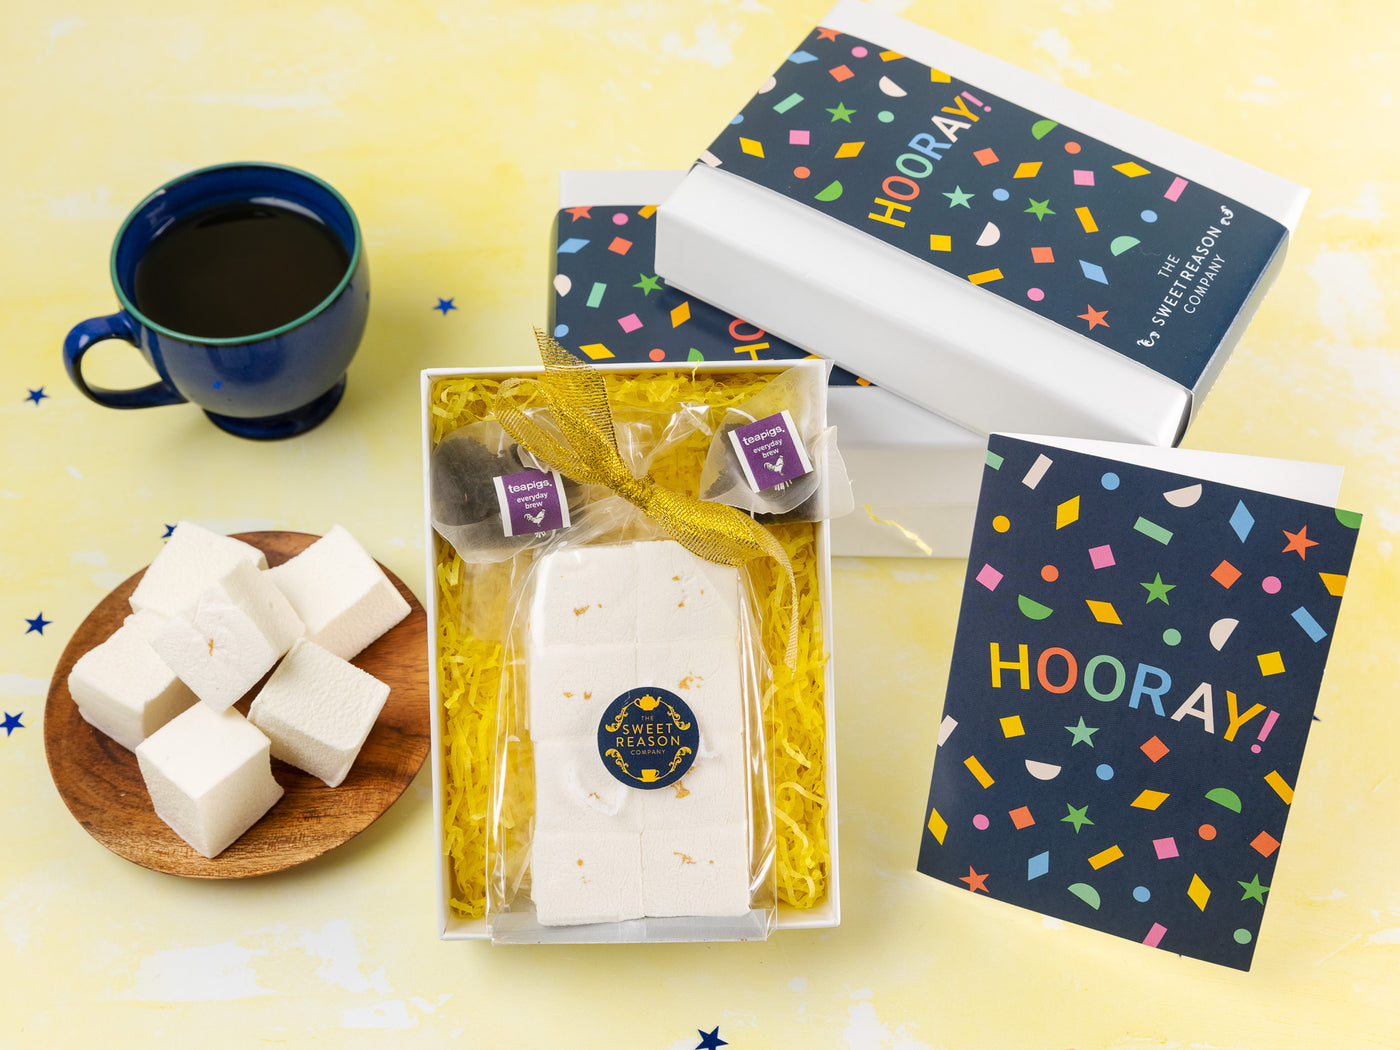 'Hooray!' Champagne & Elderflower Marshmallows with Tea